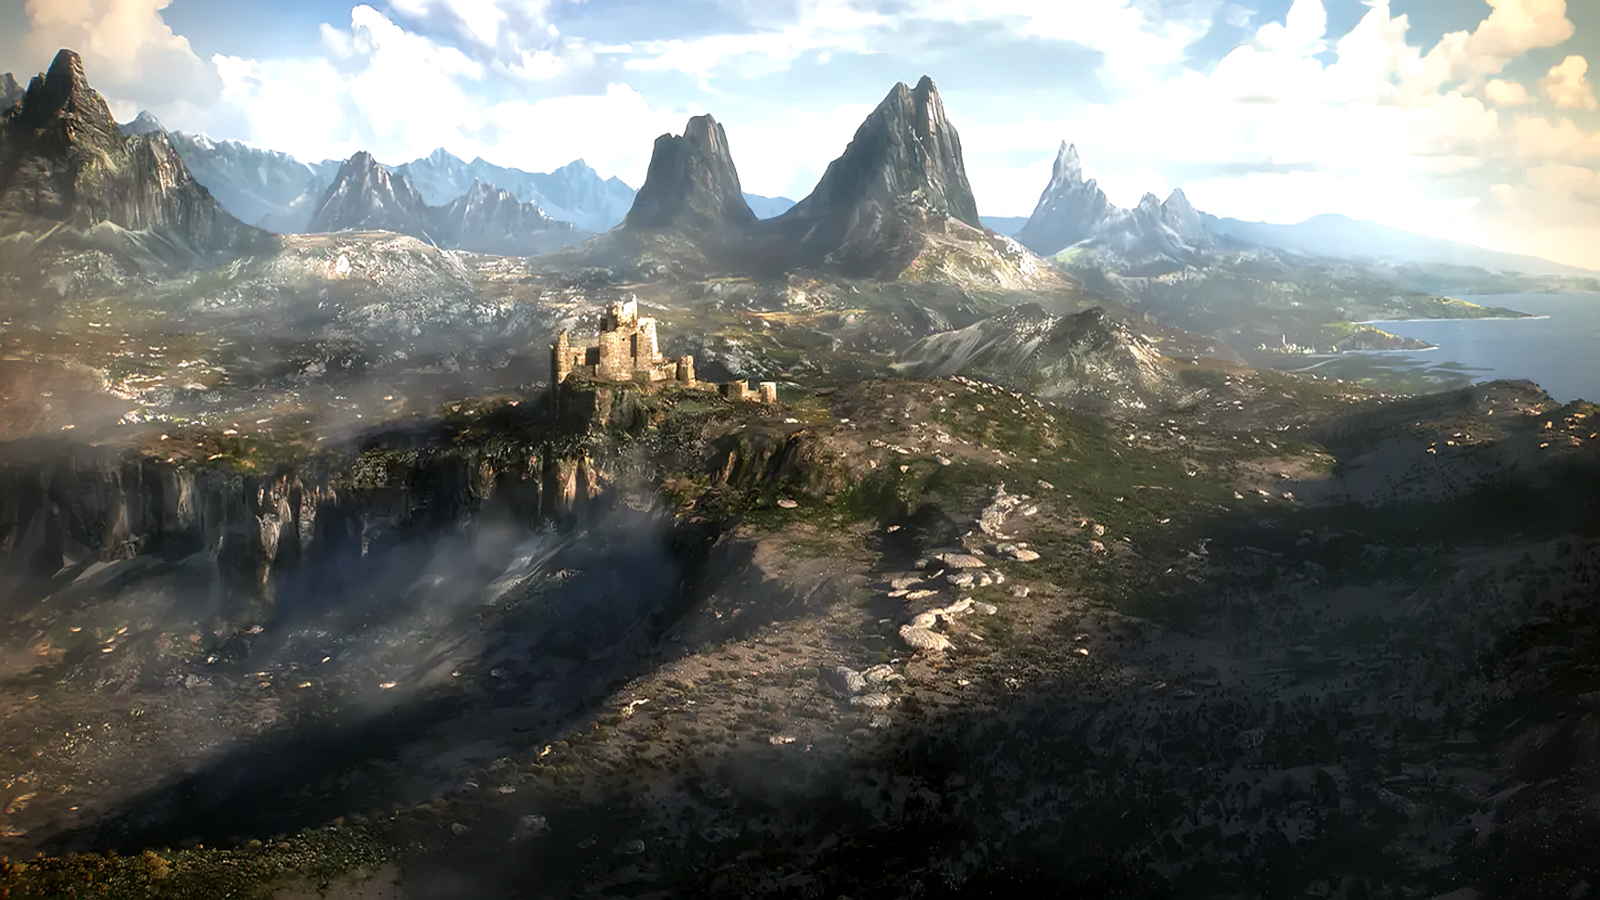 Elder Scrolls 6 isn't in development, says Bethesda